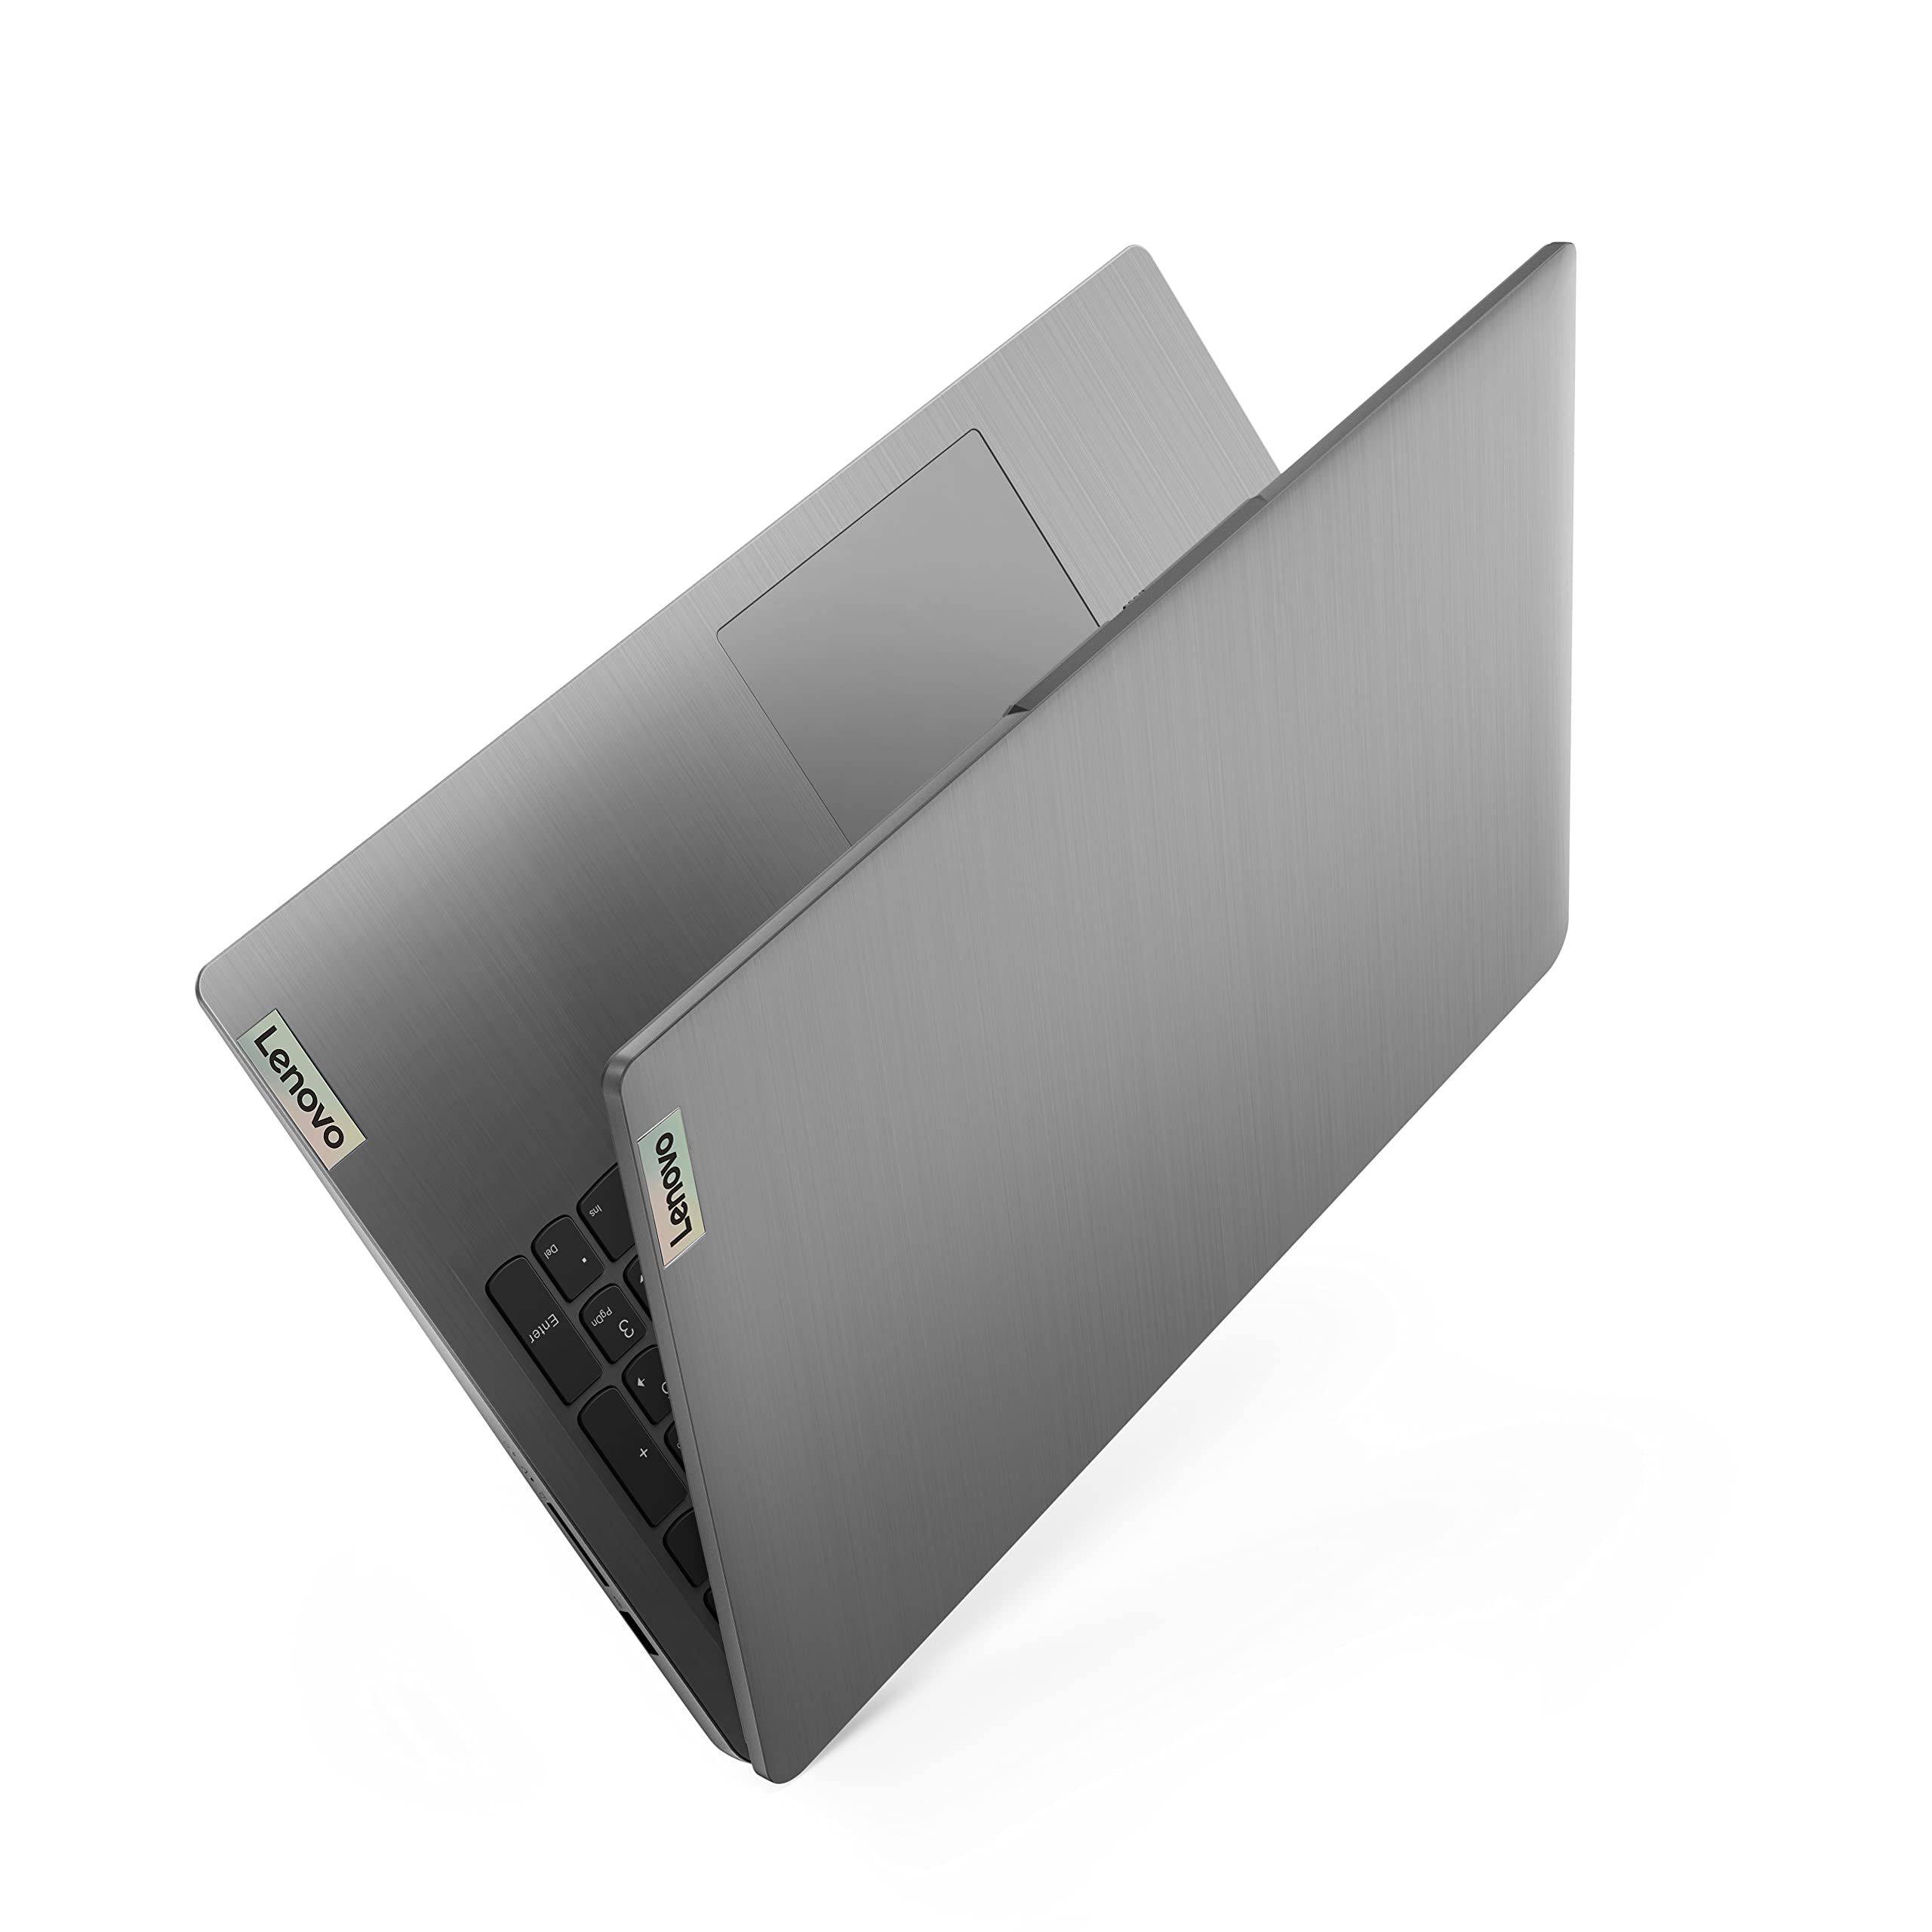 Lenovo - 2022 - IdeaPad 3i - Essential Laptop Computer - Intel Core i5 12th Gen - 15.6